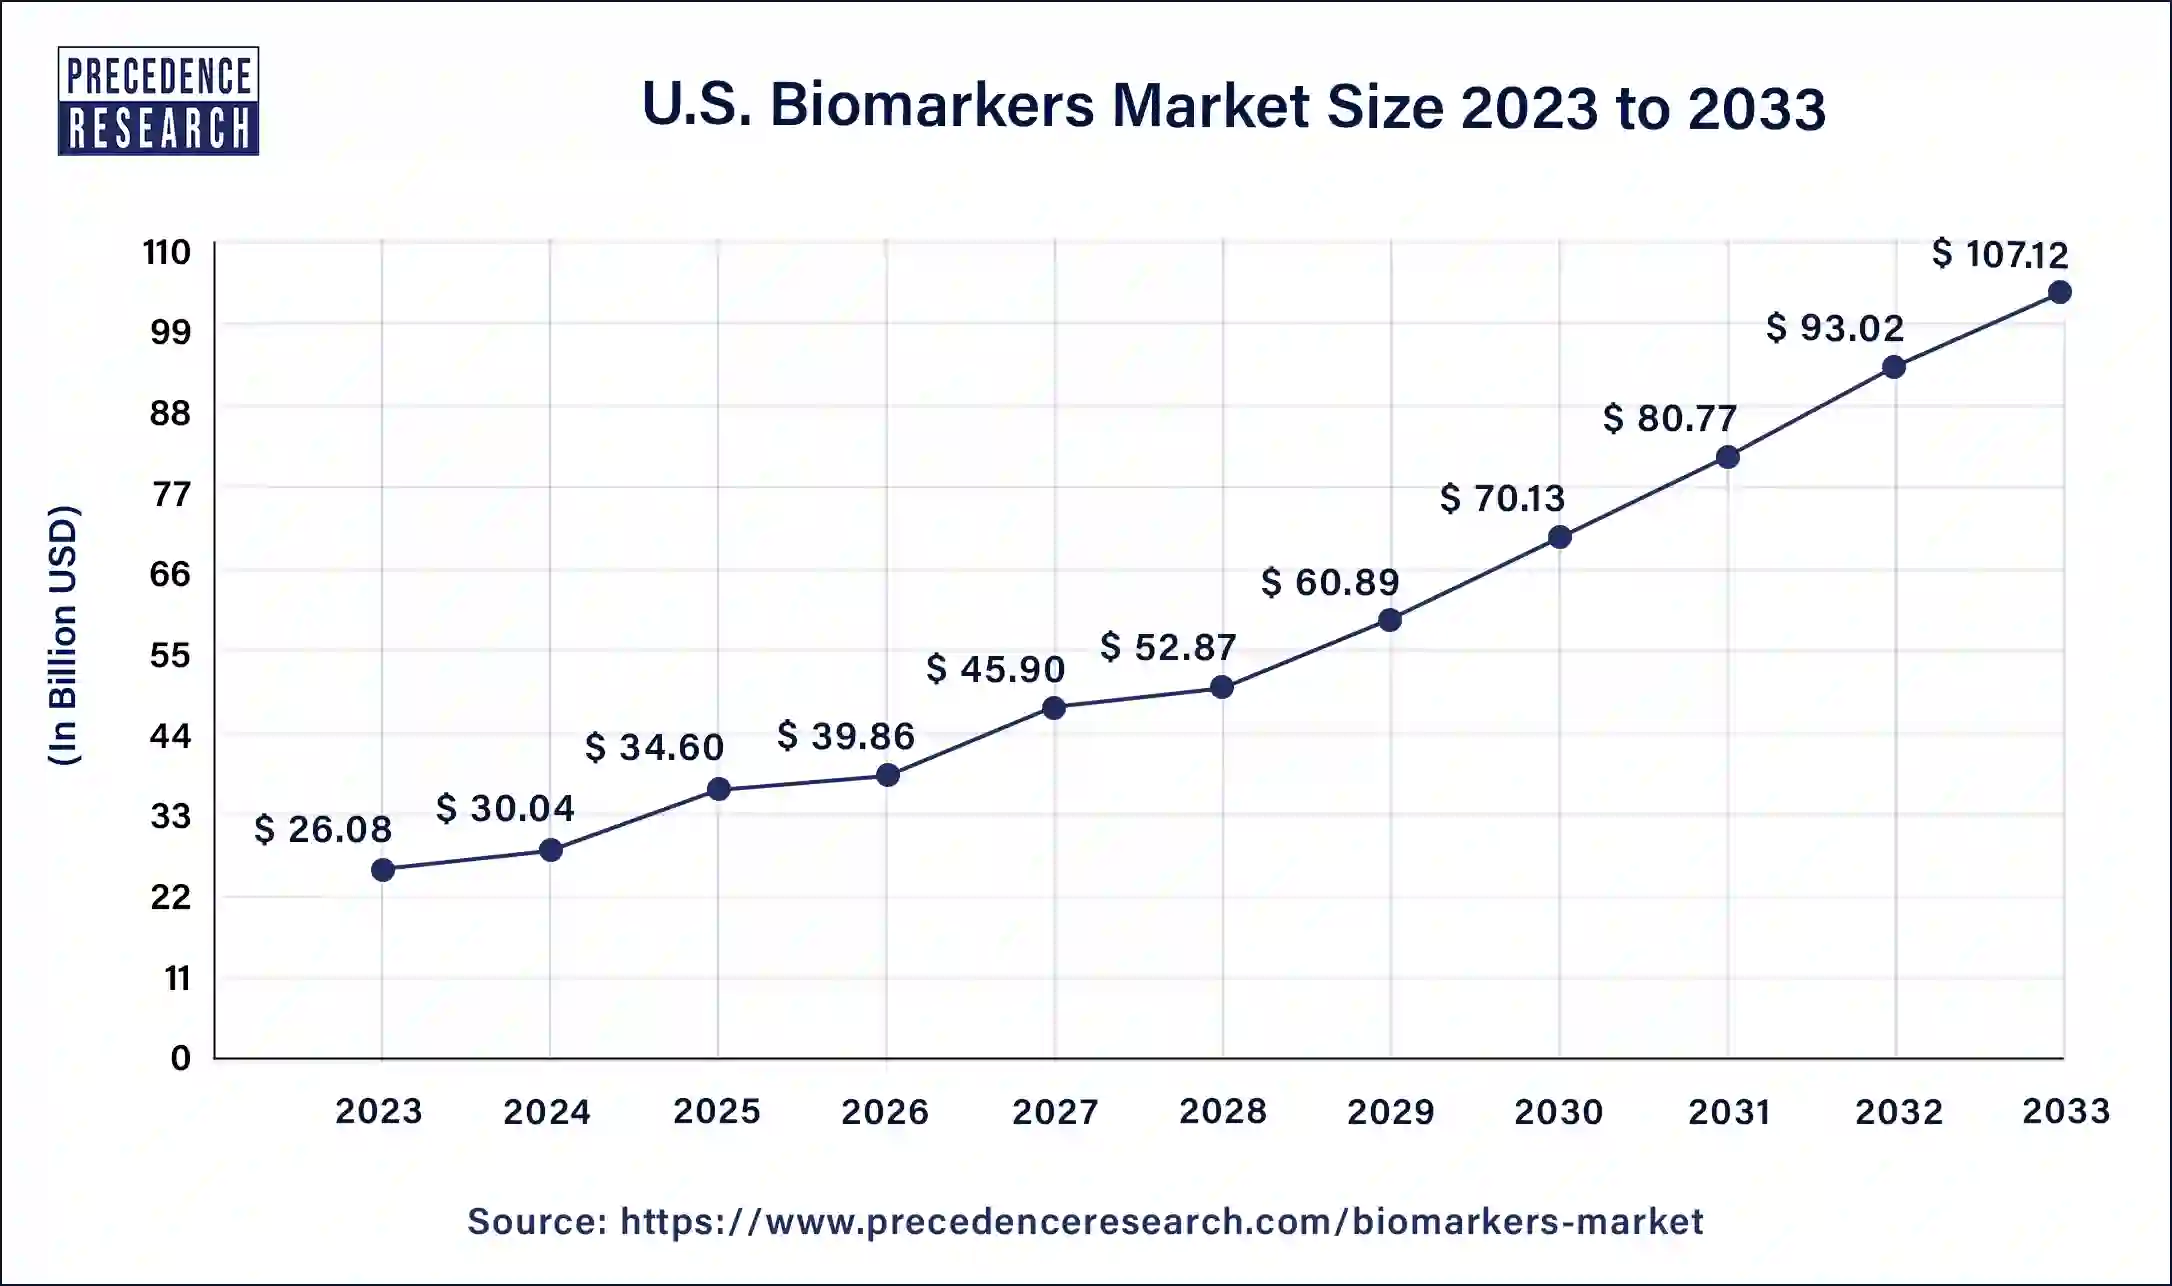 U.S. Biomarkers Market Size 2024 to 2033